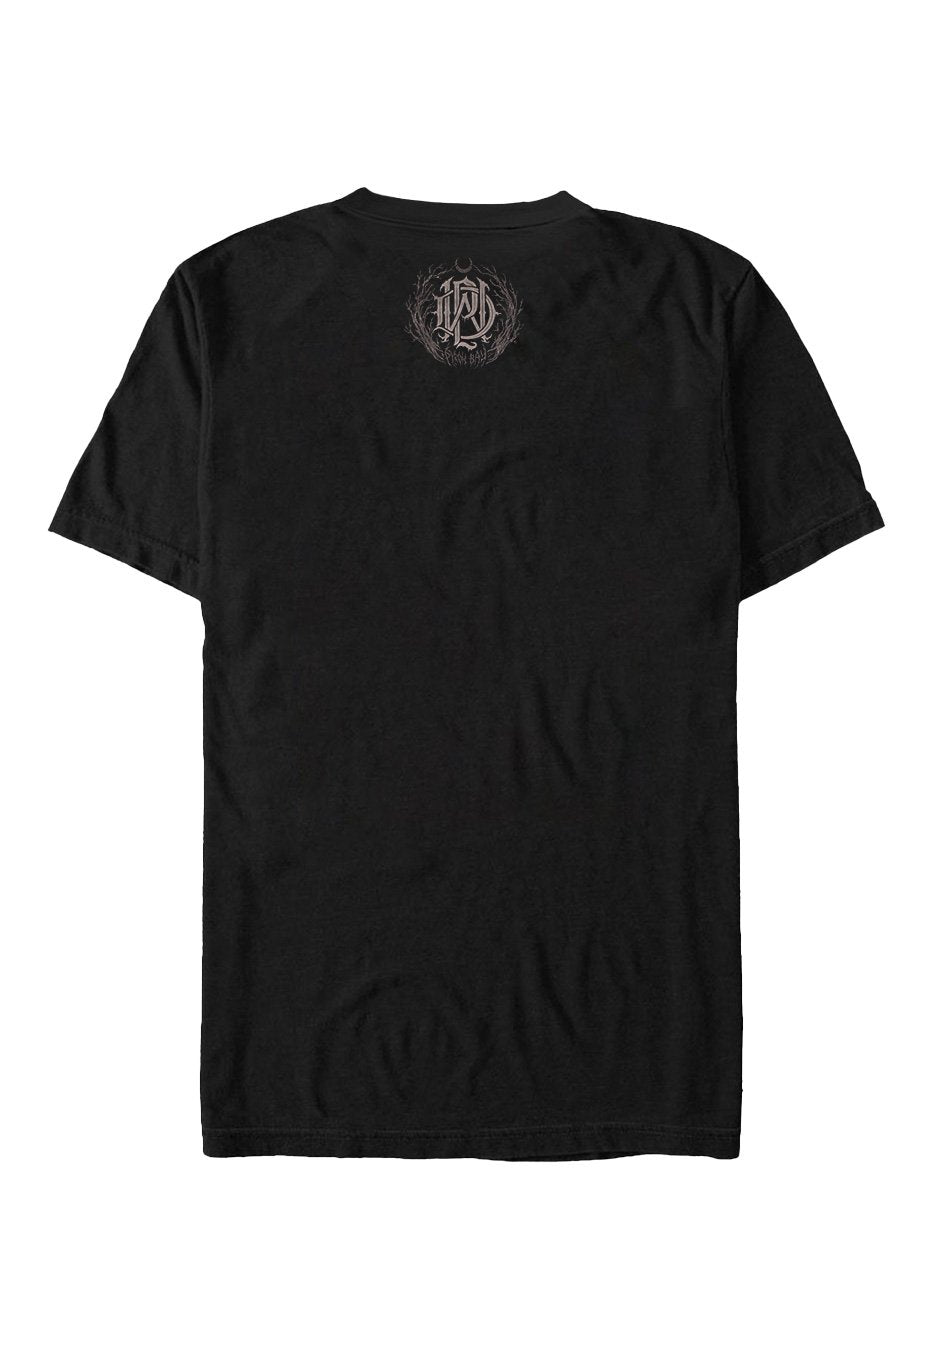 Parkway Drive - Metal Crest - T-Shirt